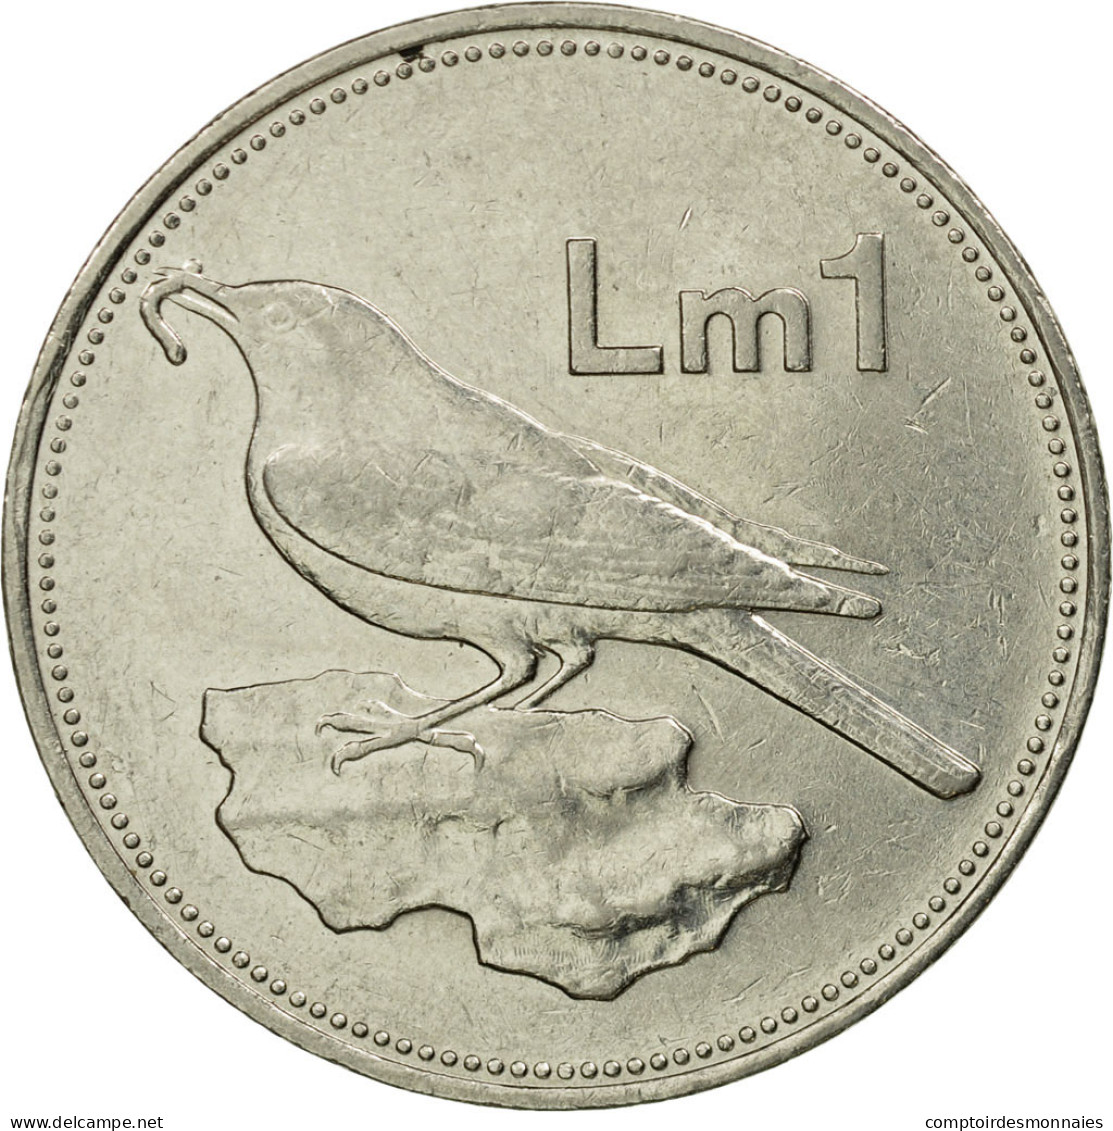 Monnaie, Malte, Lira, 1986, British Royal Mint, TTB, Nickel, KM:82 - Malte